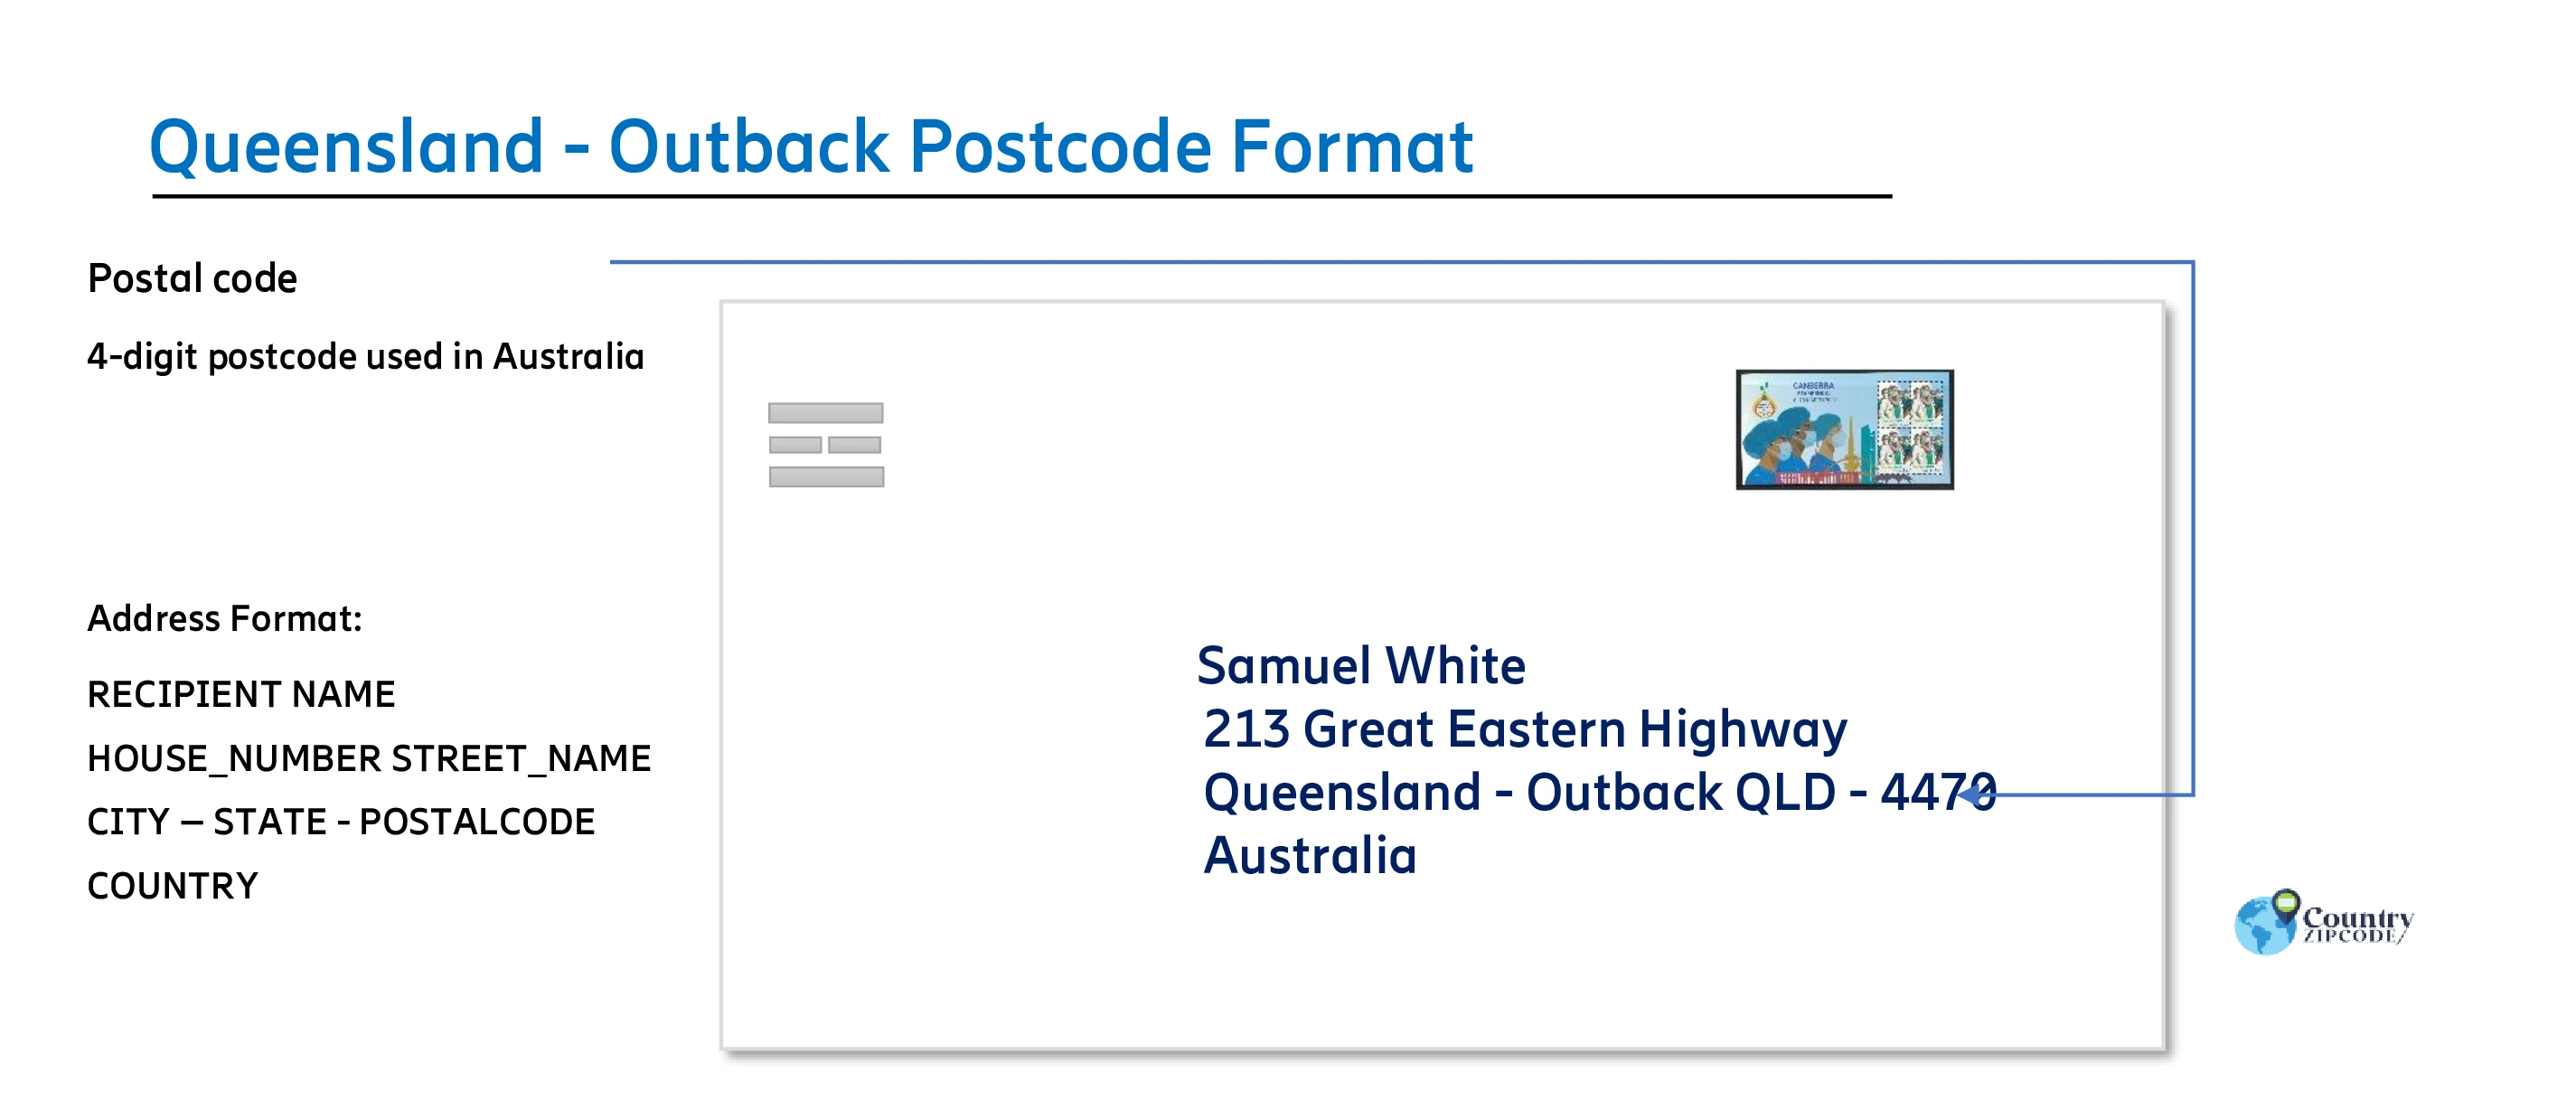 Queensland - Outback Australia Postal code format